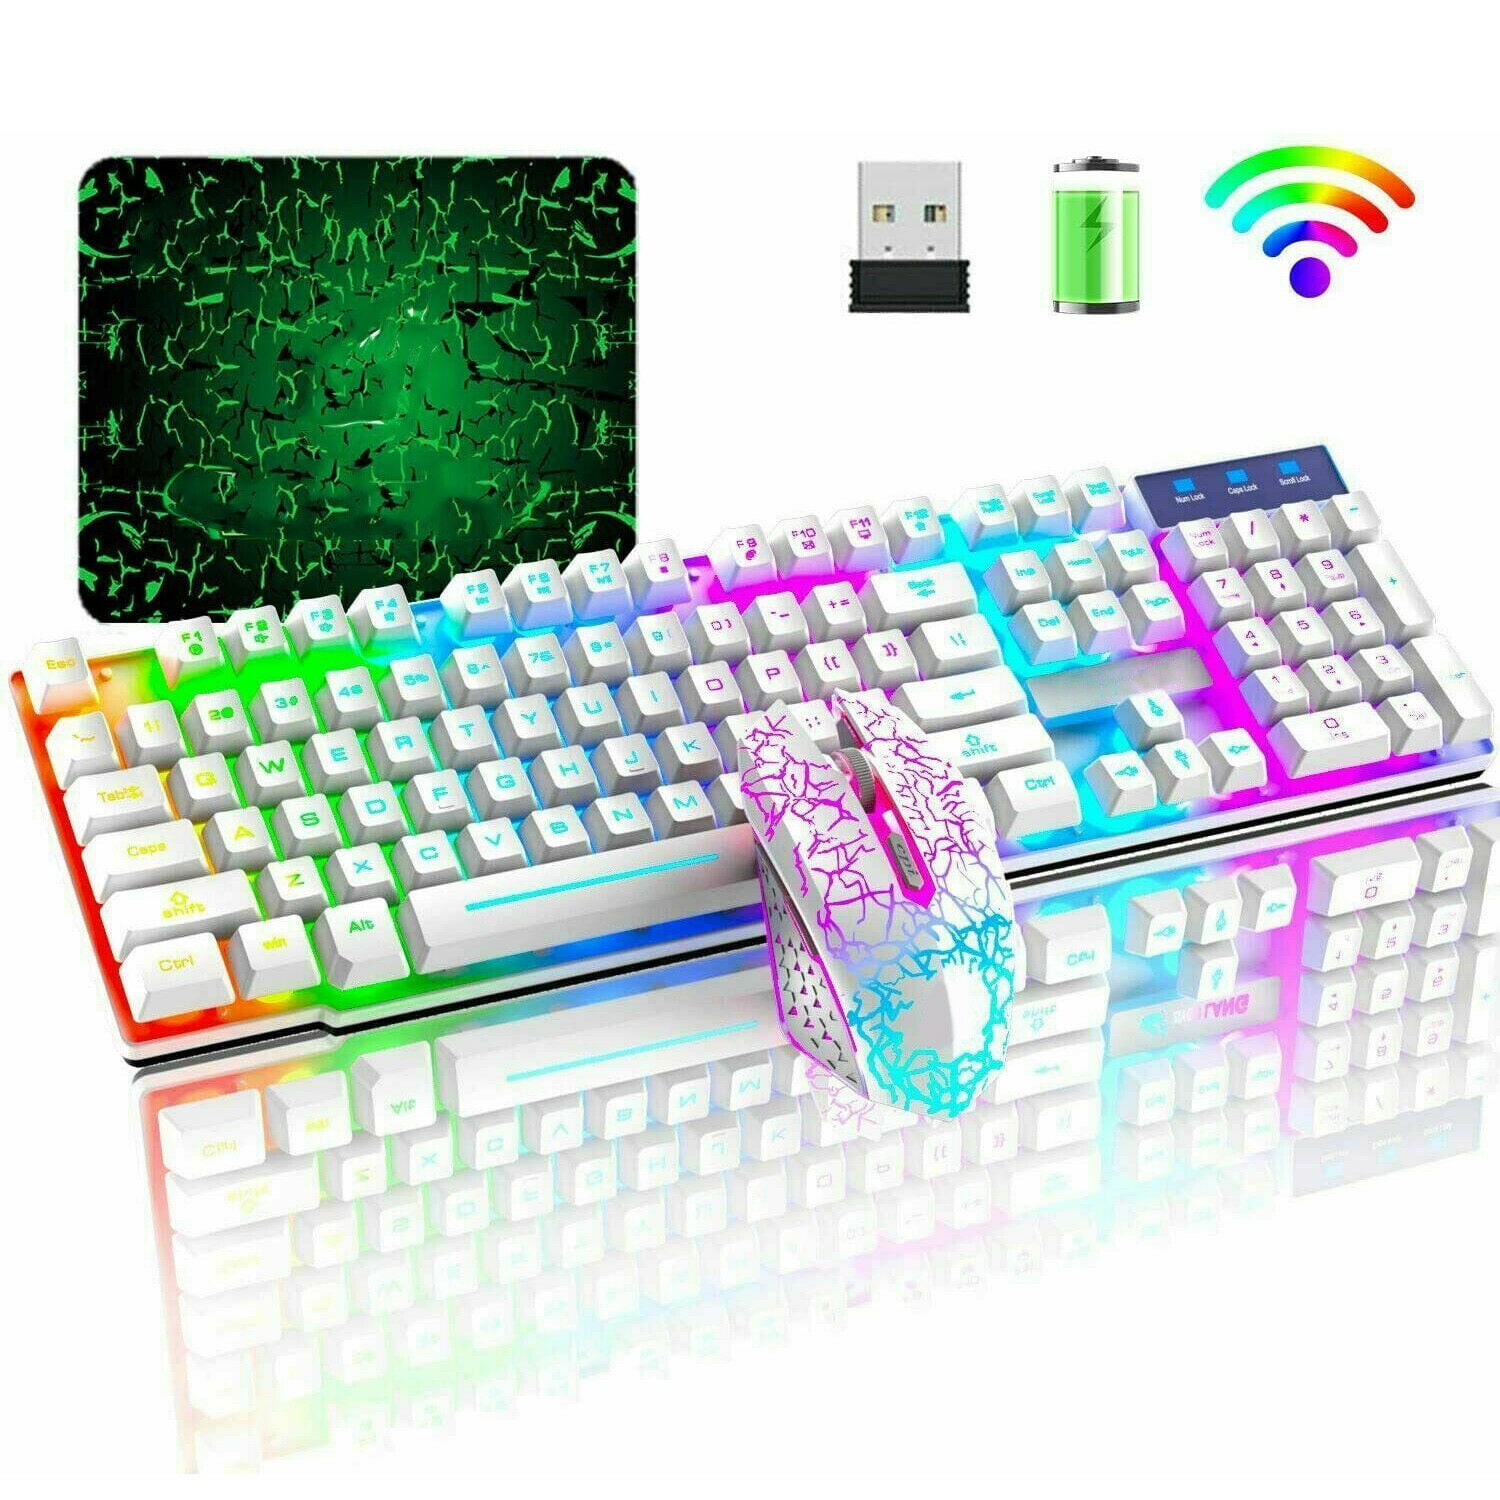 Waterproof 2.4G Wireless Rechargeable Luminous Ergonomic Gaming Keyboard Mouse 